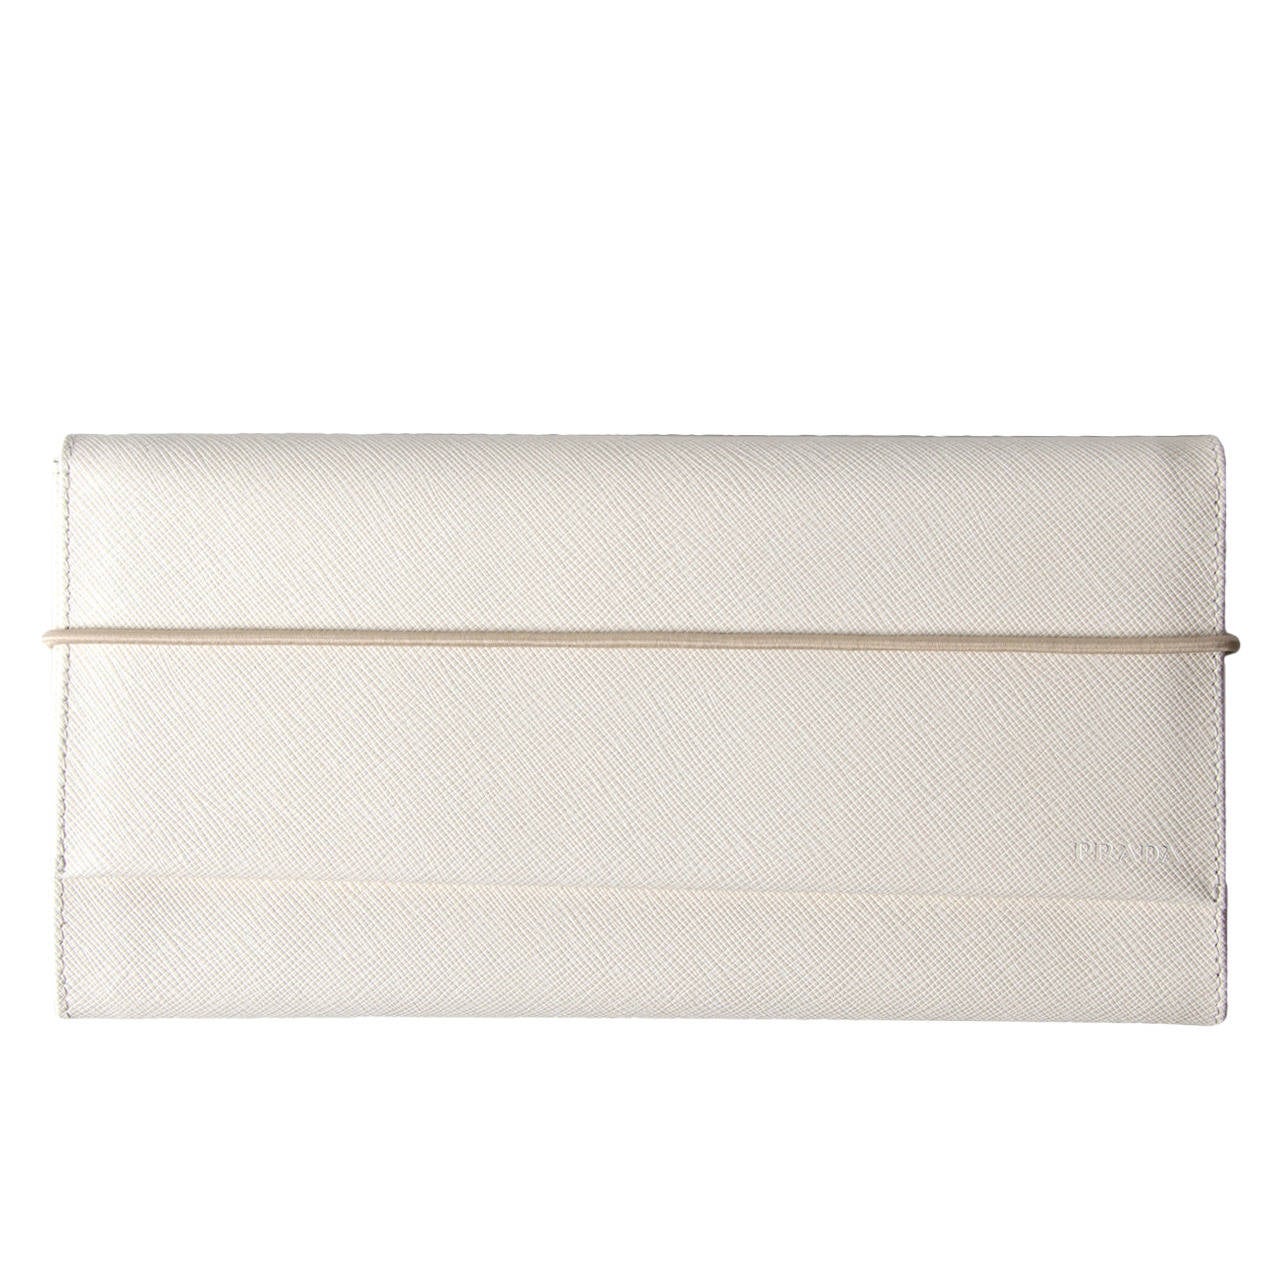 Prada White Leather Document Holder